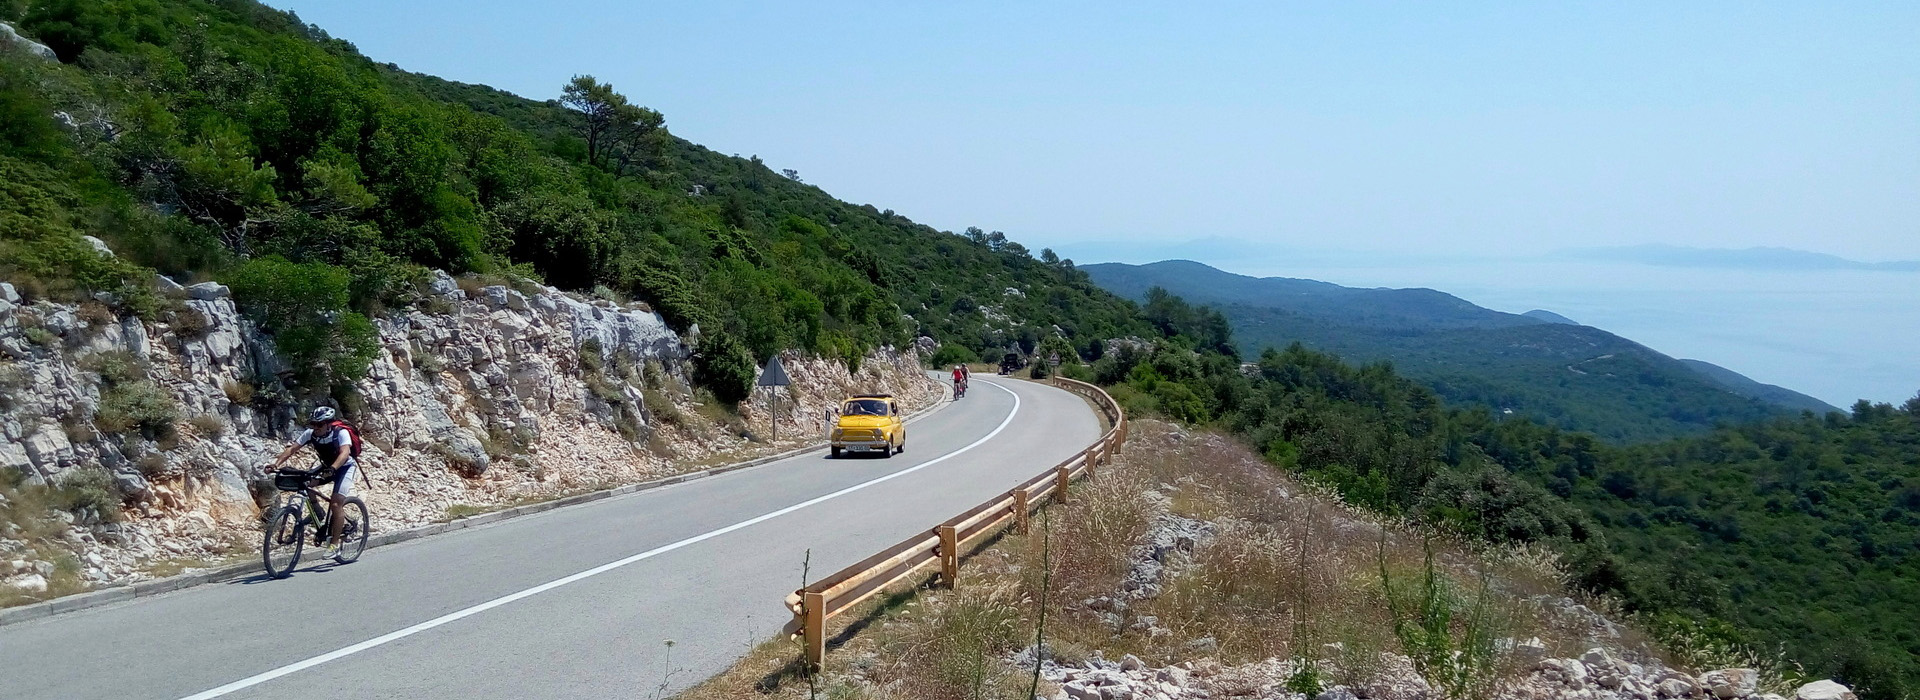 Cycling on the Dalmatian Coast guided holiday - Korčula